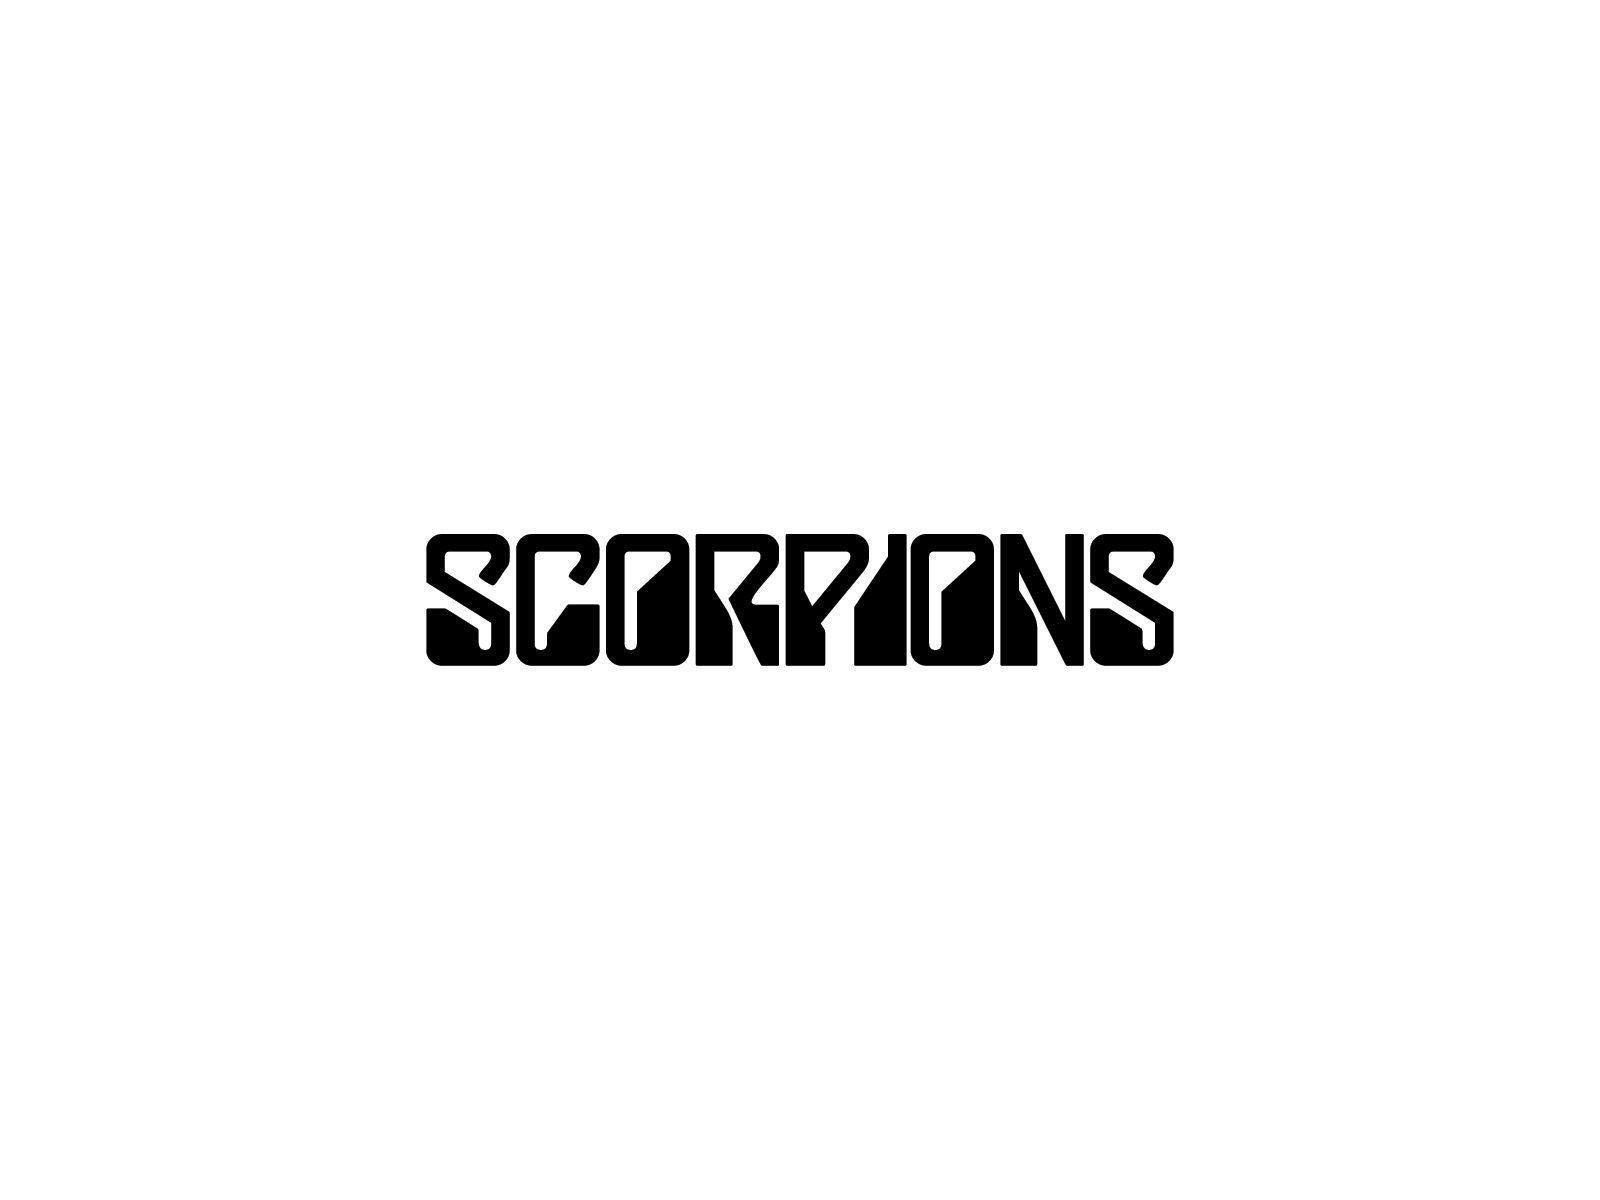 Scorpions logo and wallpaper. Band logos band logos, metal